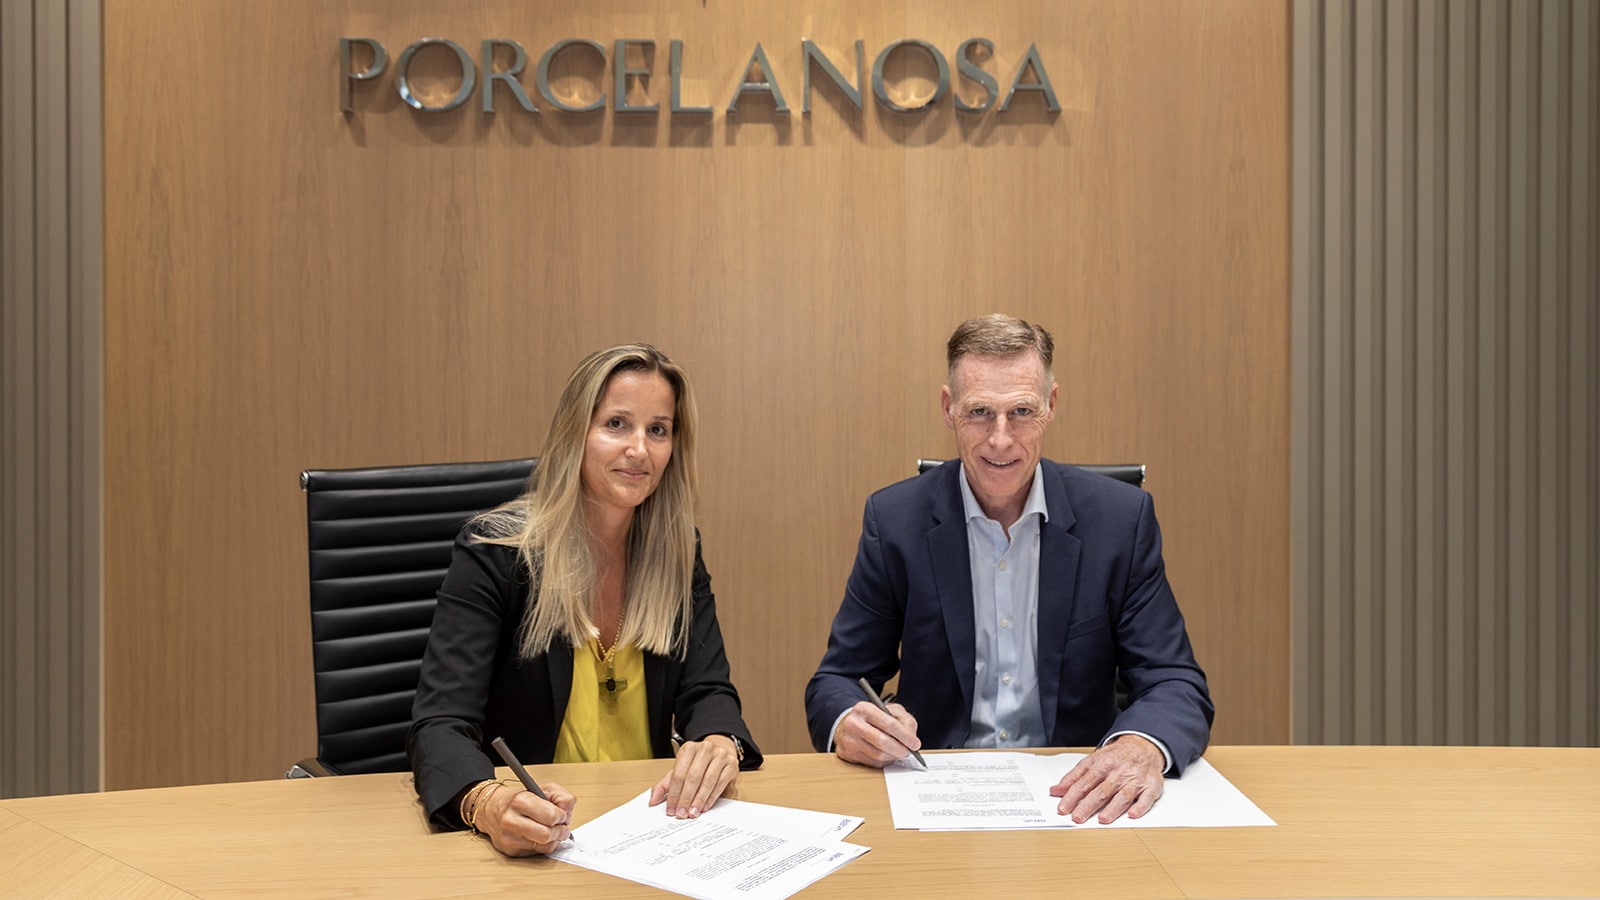 Porcelanosa moves toward sustainable financing with BBVA